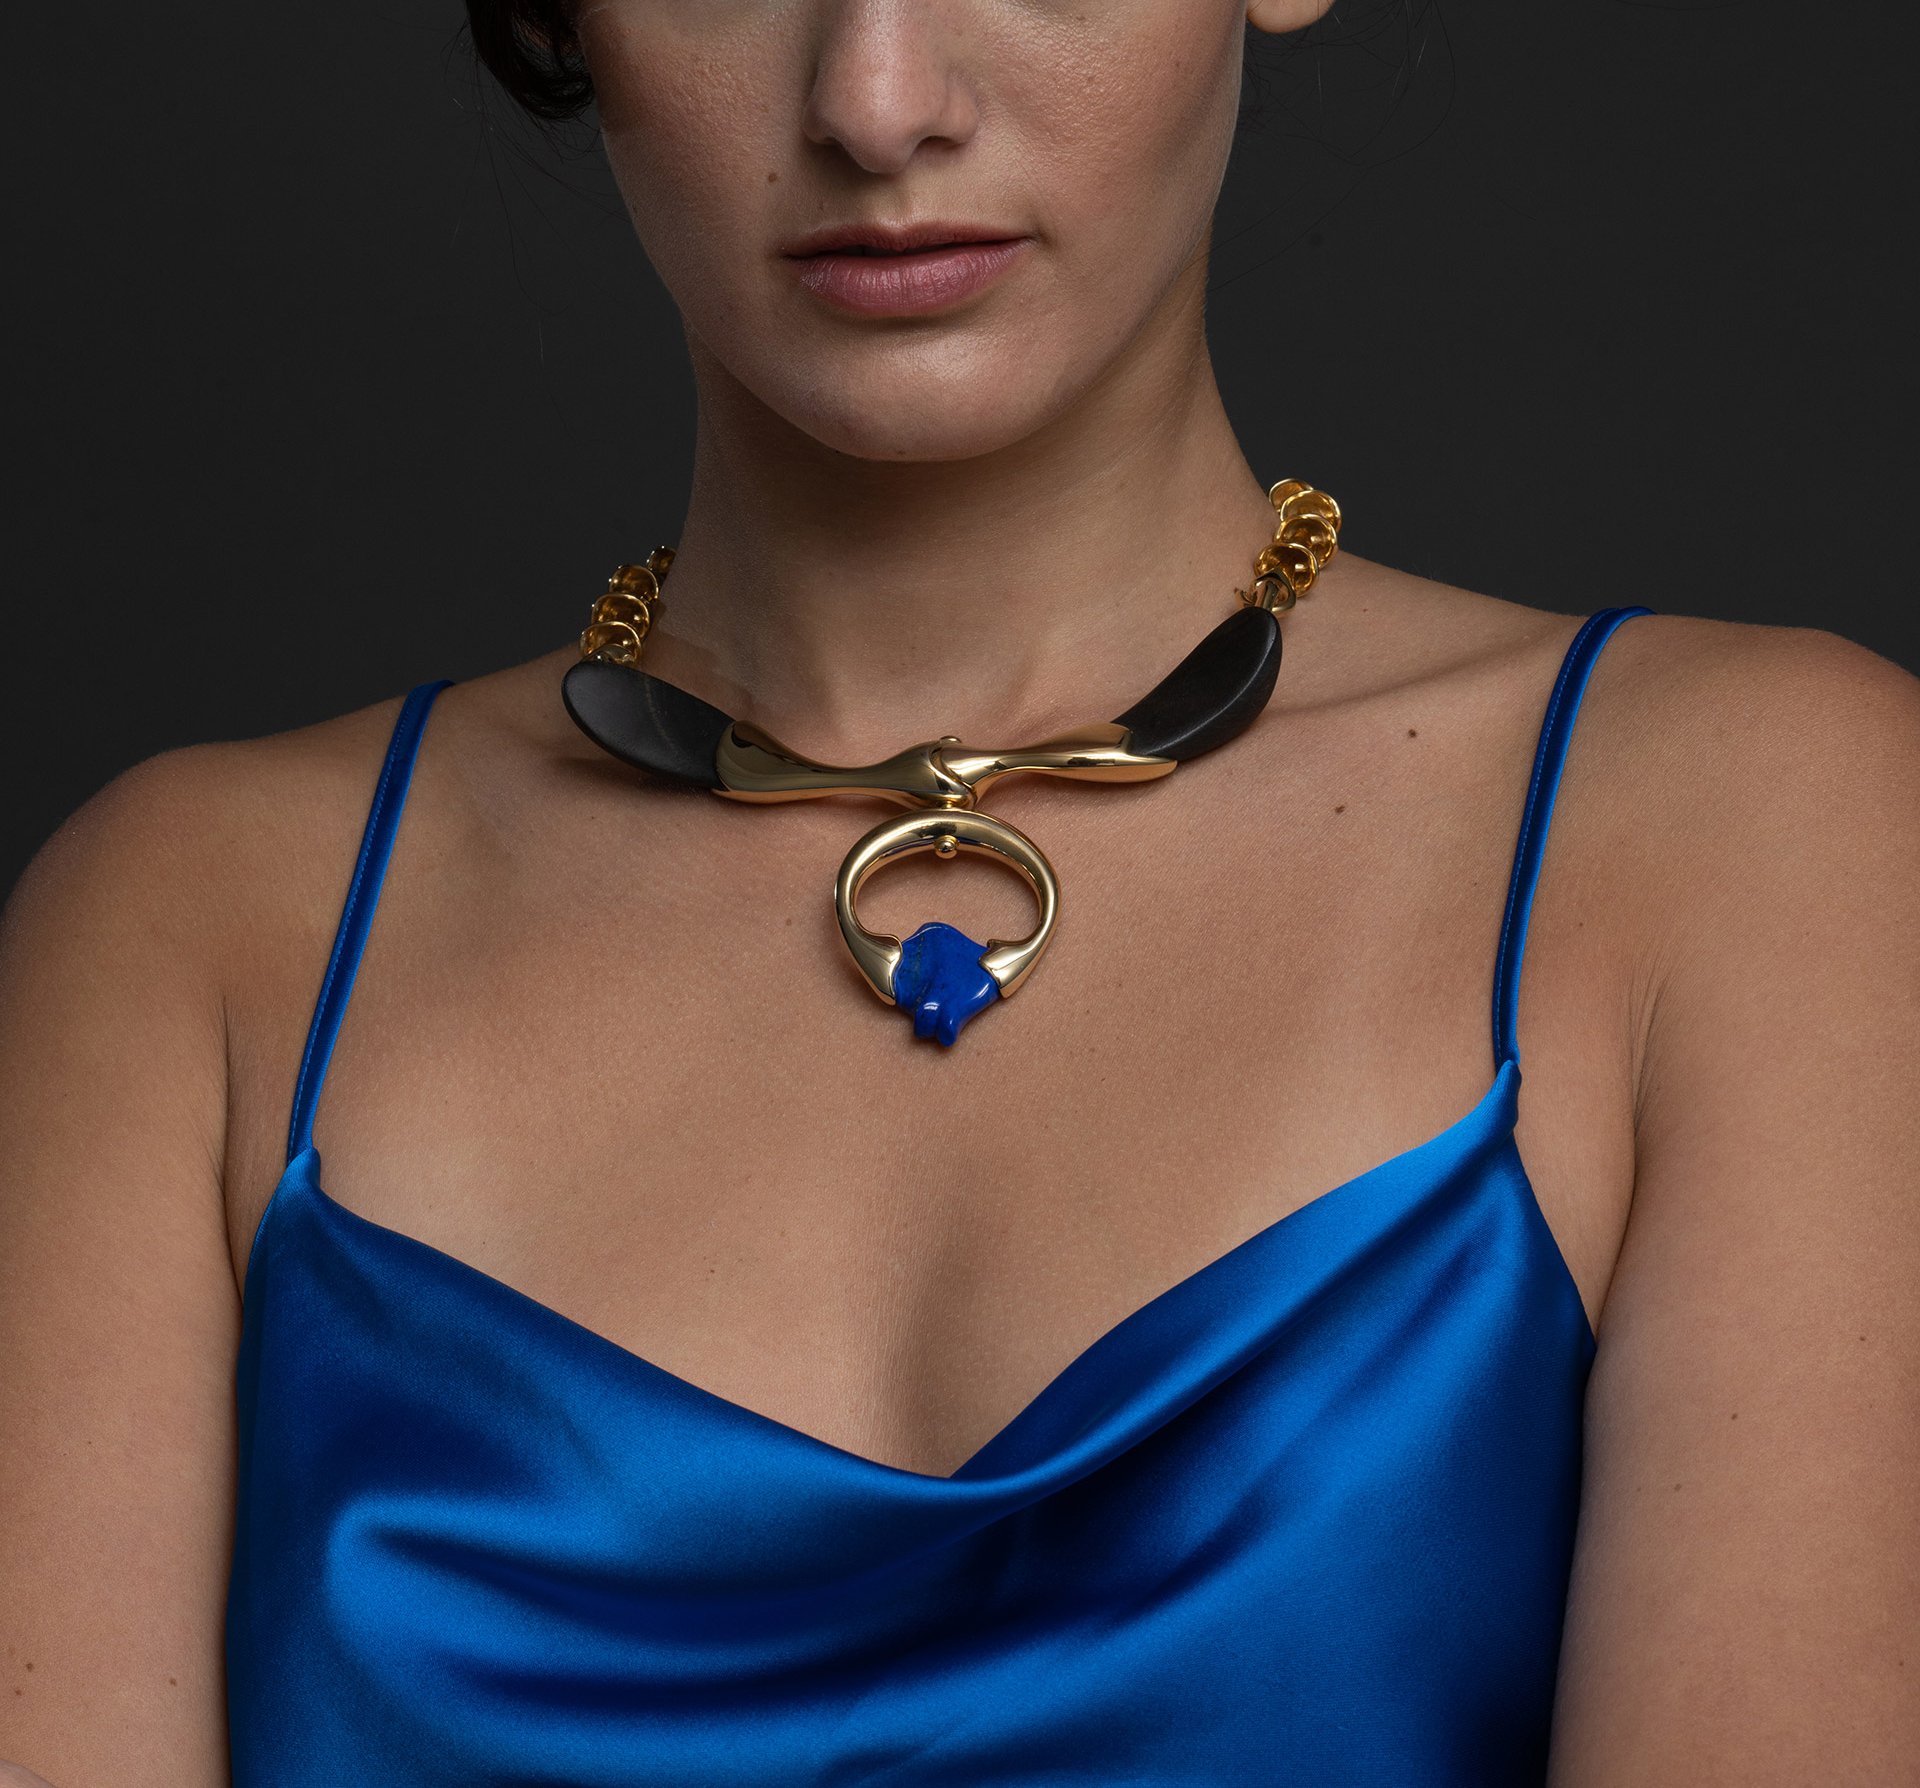 PLASTIC-egypt-necklaces-collection-julio-martinez-barnetche-marion-friedmann-gallery-LR-egypt122-lr.jpg